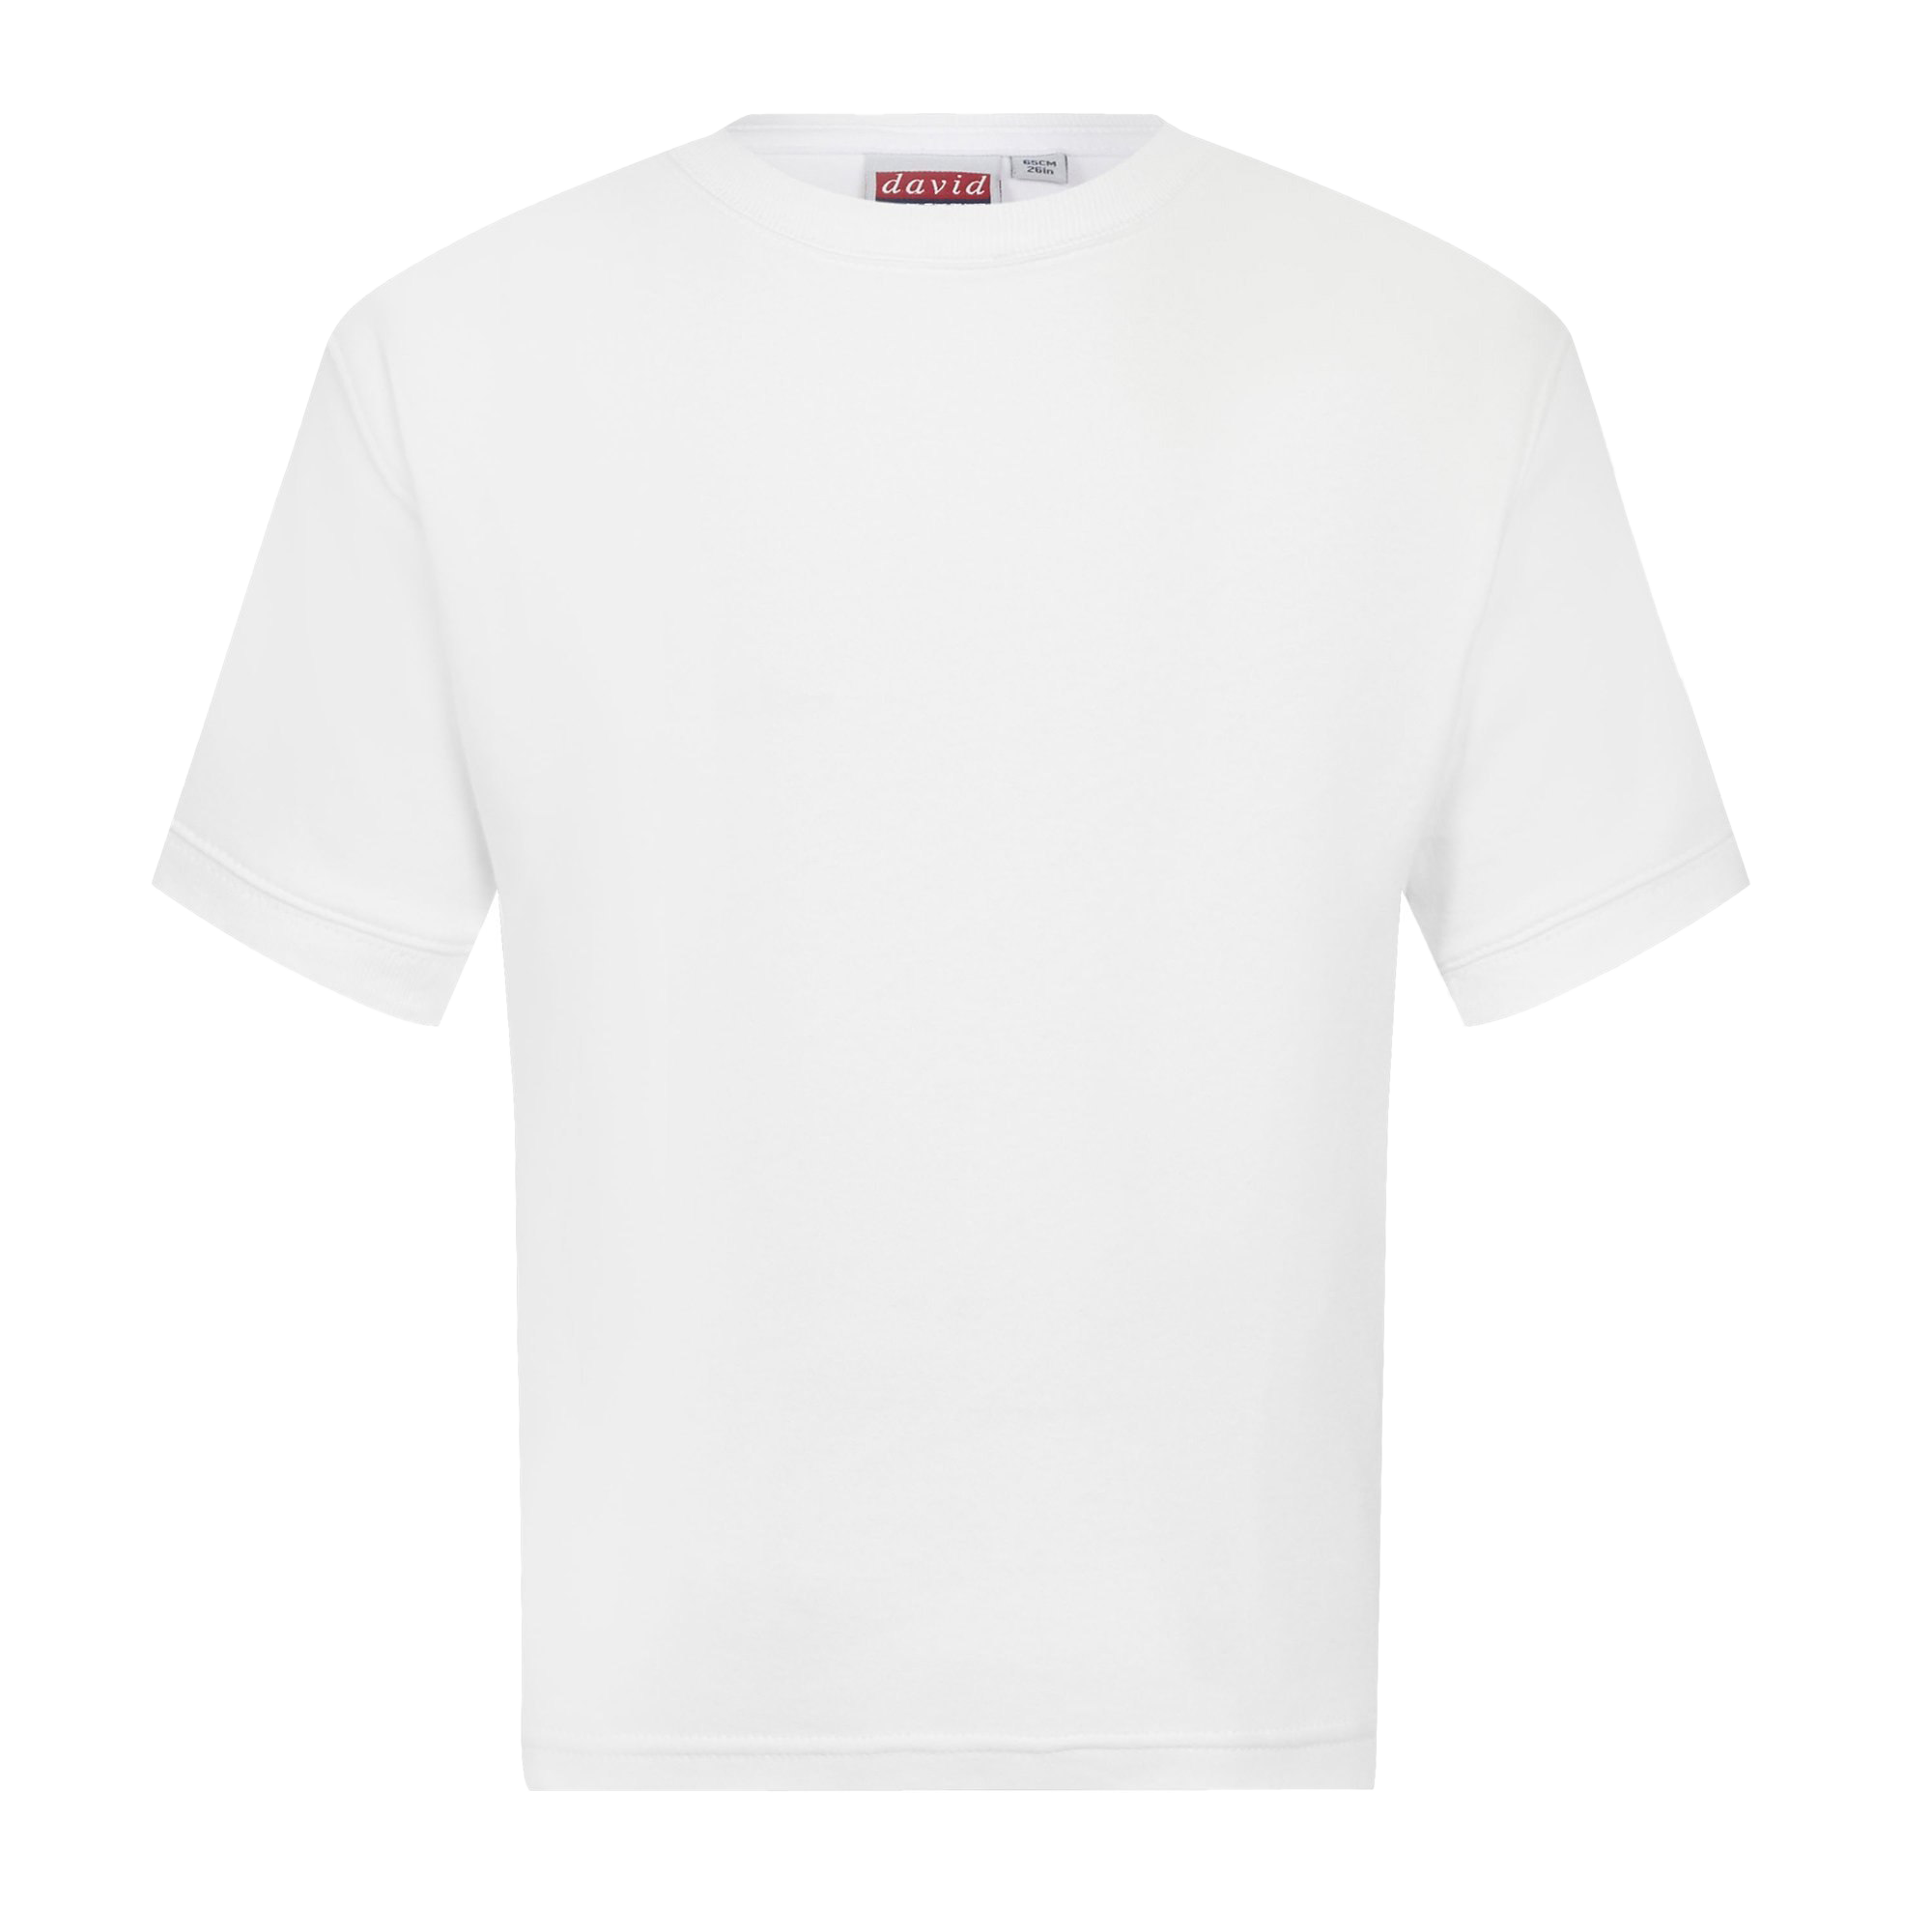 Plain White T-Shirt PNG Background Image